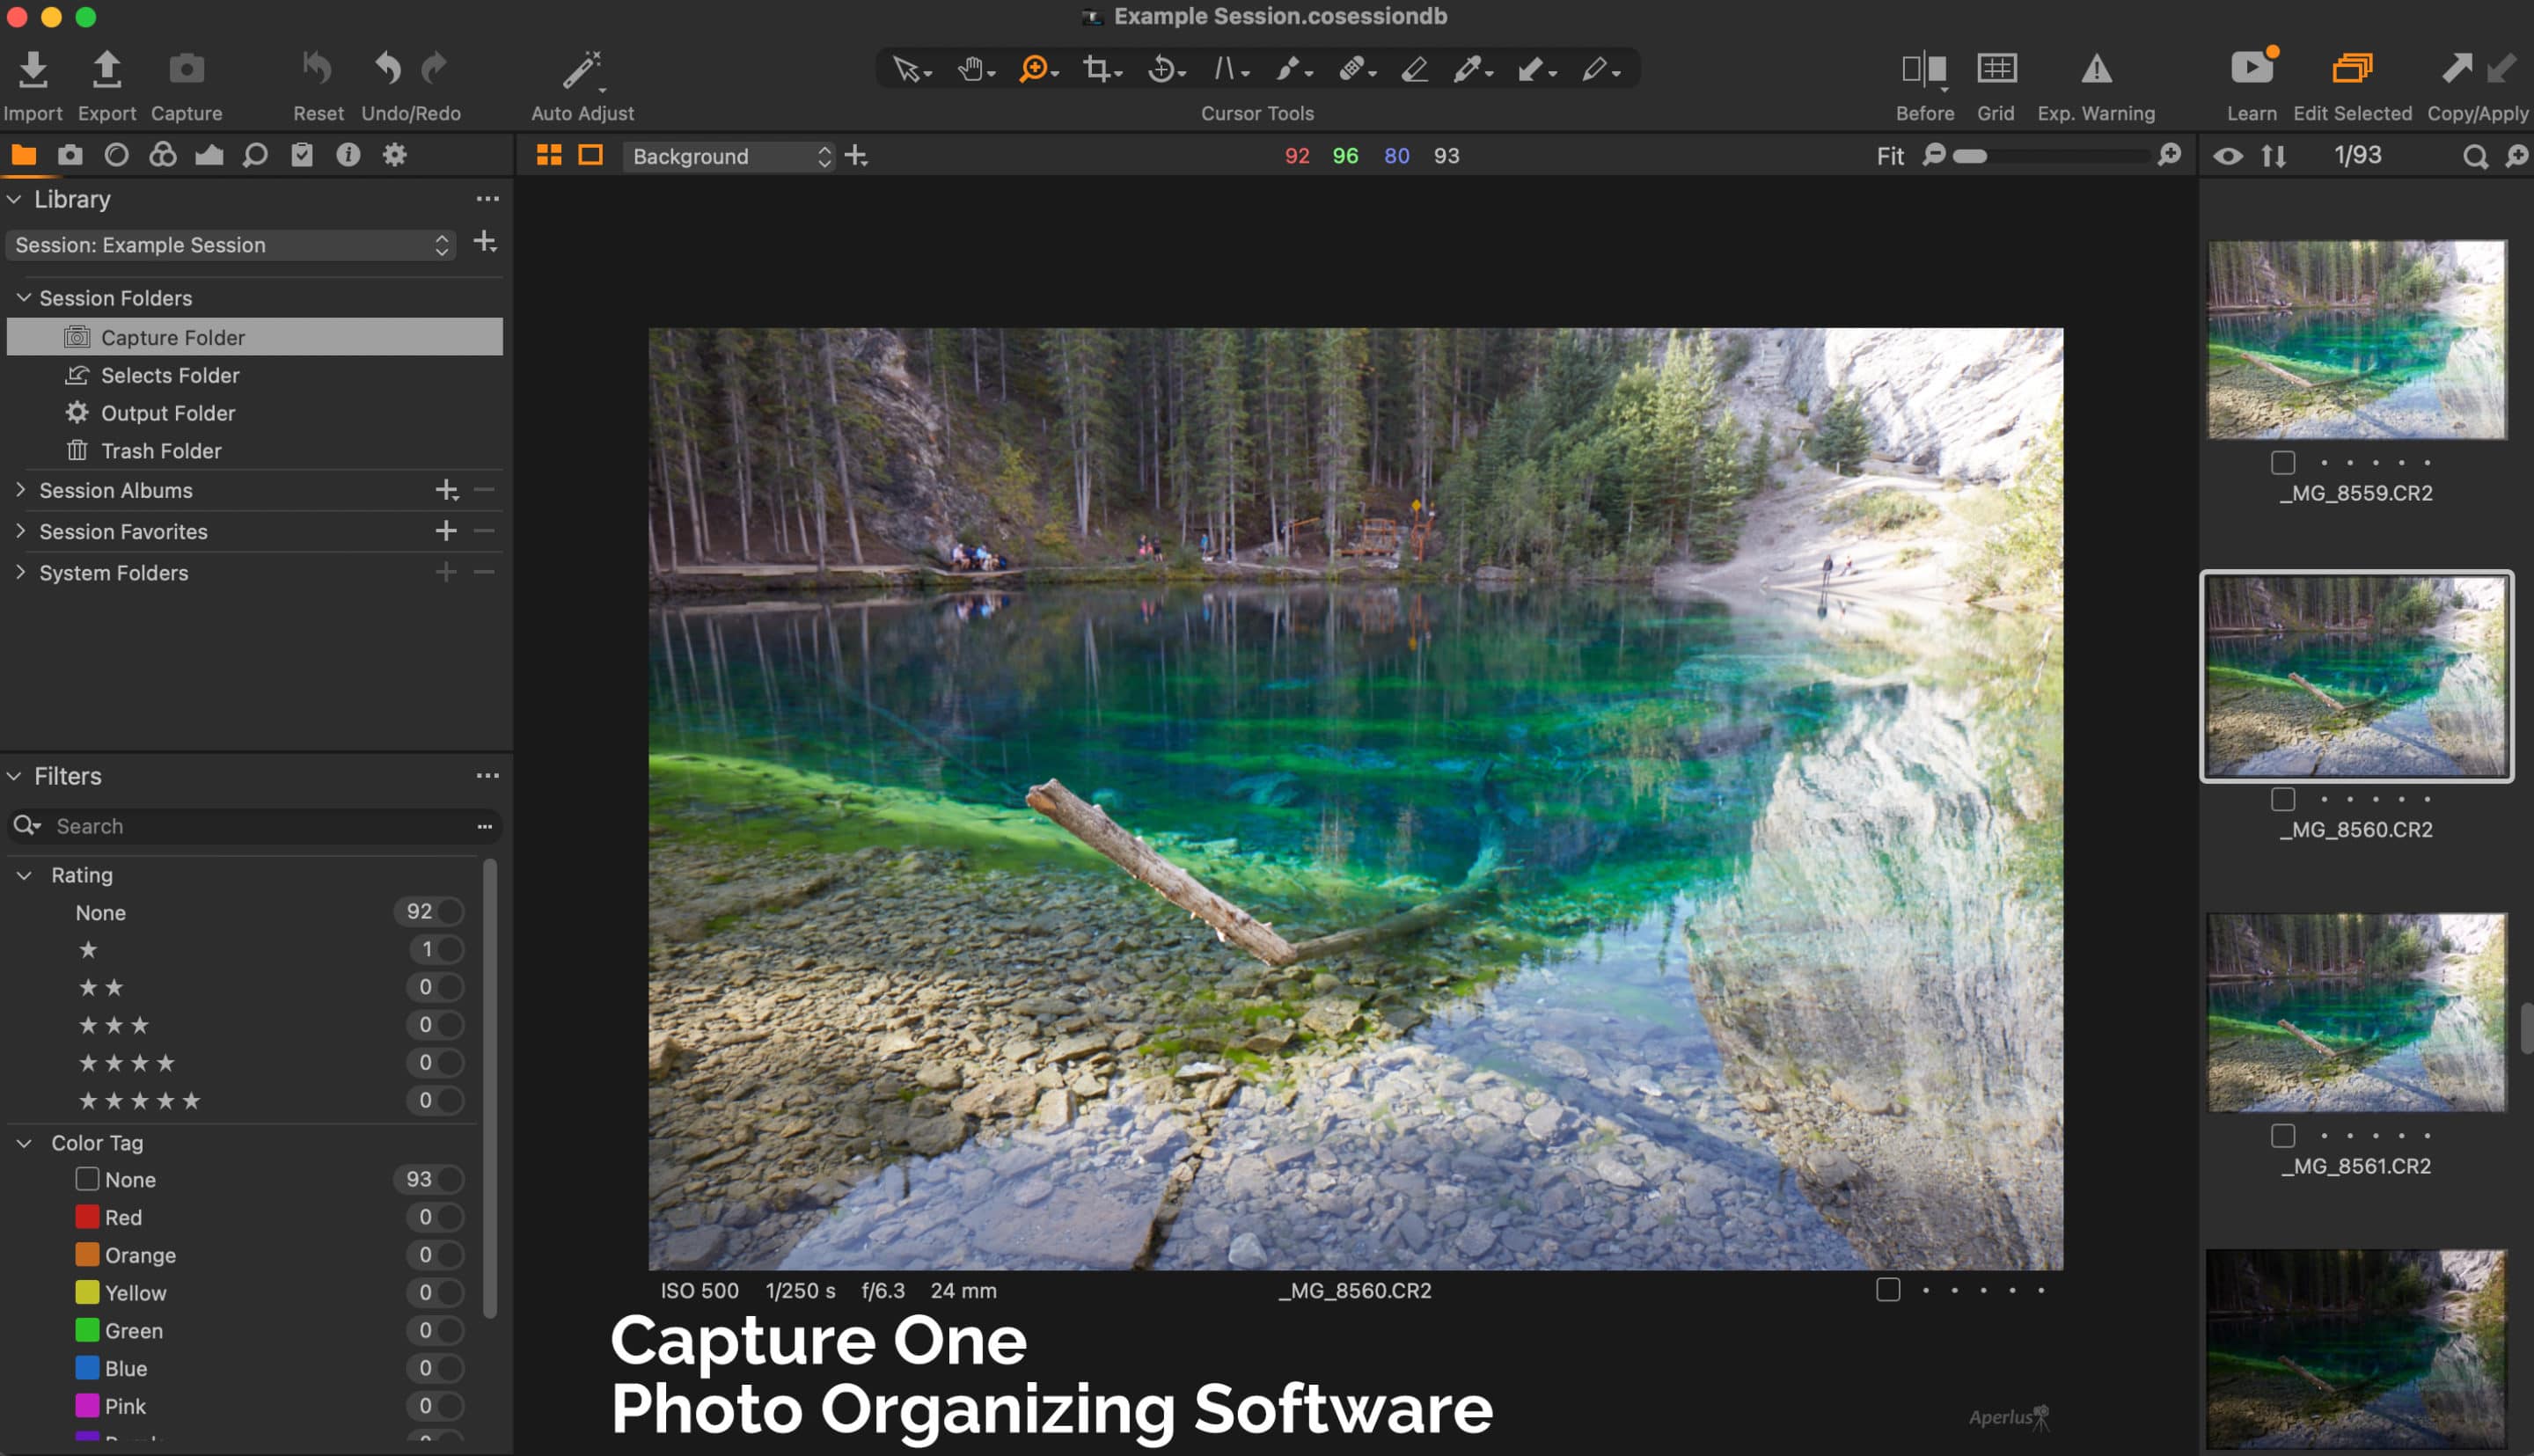 Capture One Pro photo organizing software screen shot